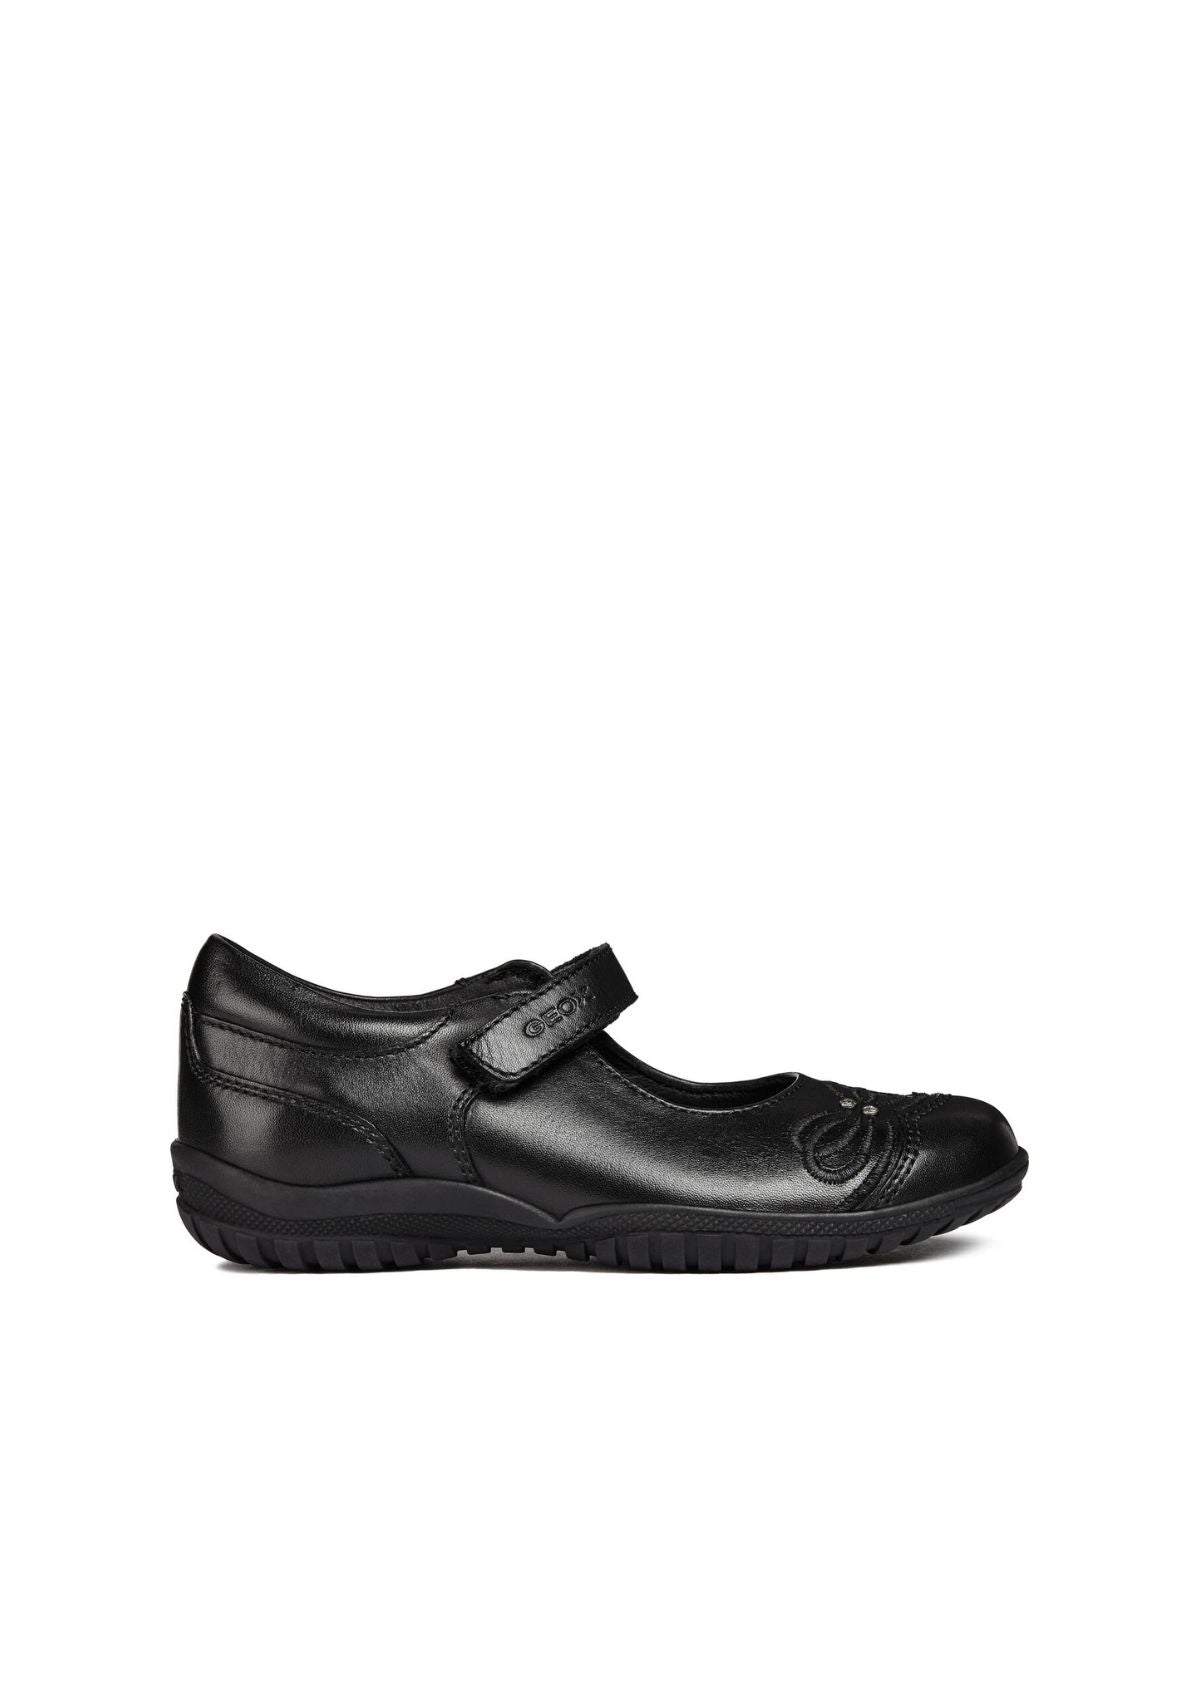 Geox Junior Girls School Shoes Shadow Black Velcro side